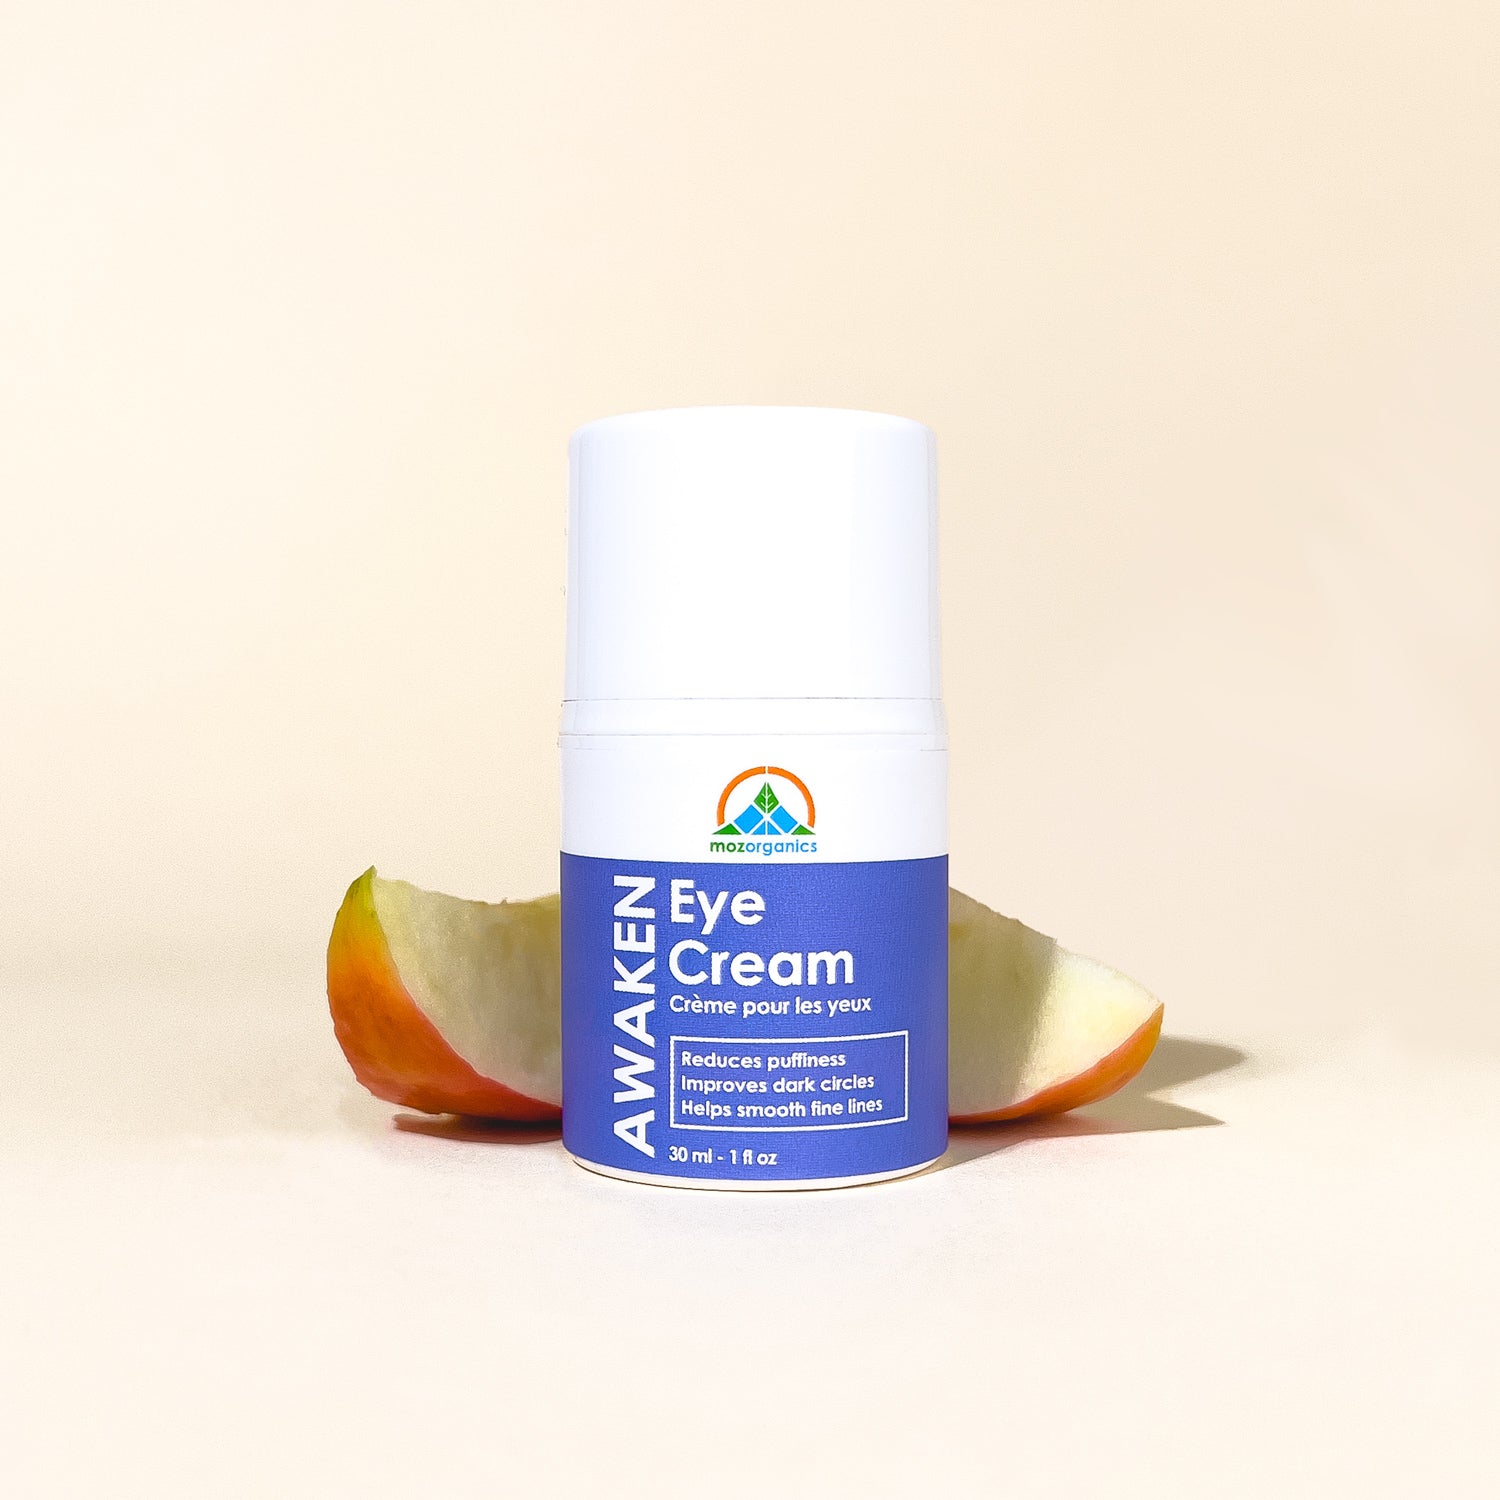 Eye Cream best: Plump, Firm, Wrinkle-Free Skin